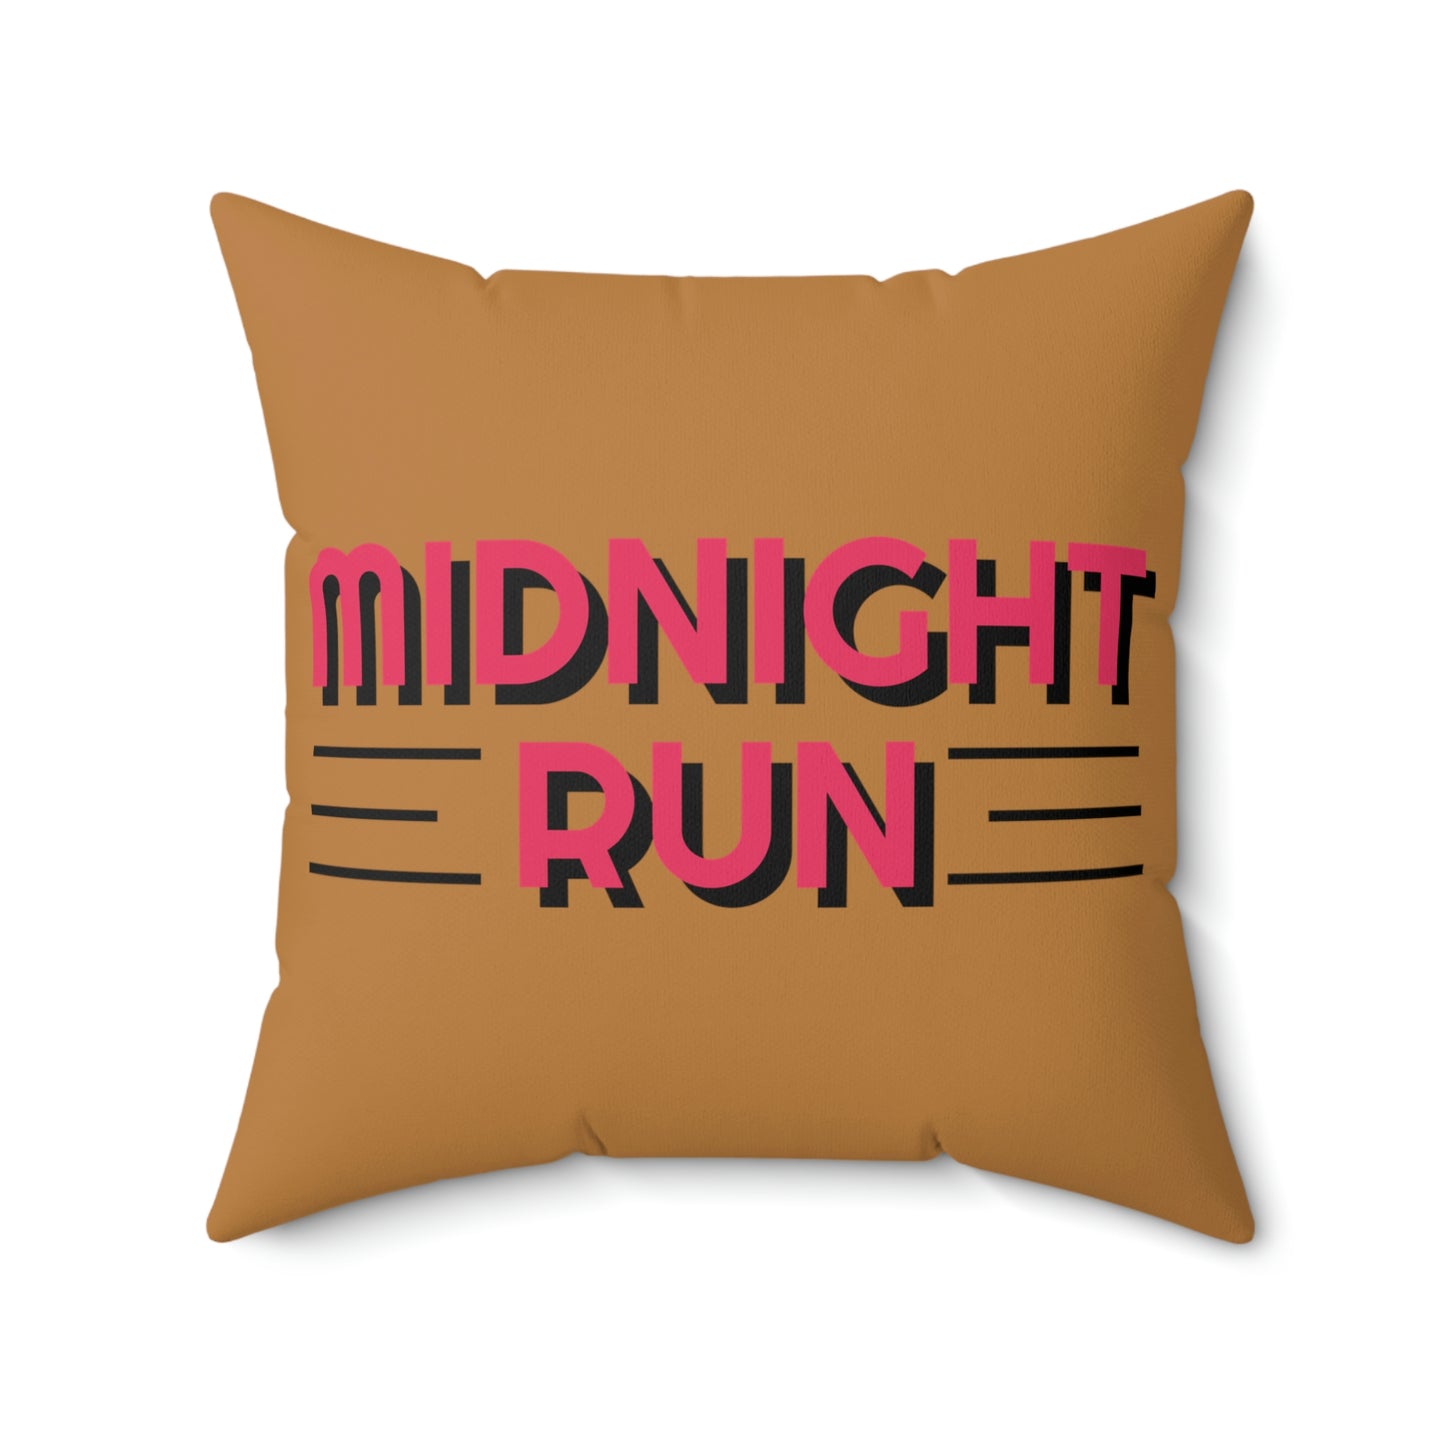 Spun Polyester Square Pillow Case "Midnight Run on Light Brown”